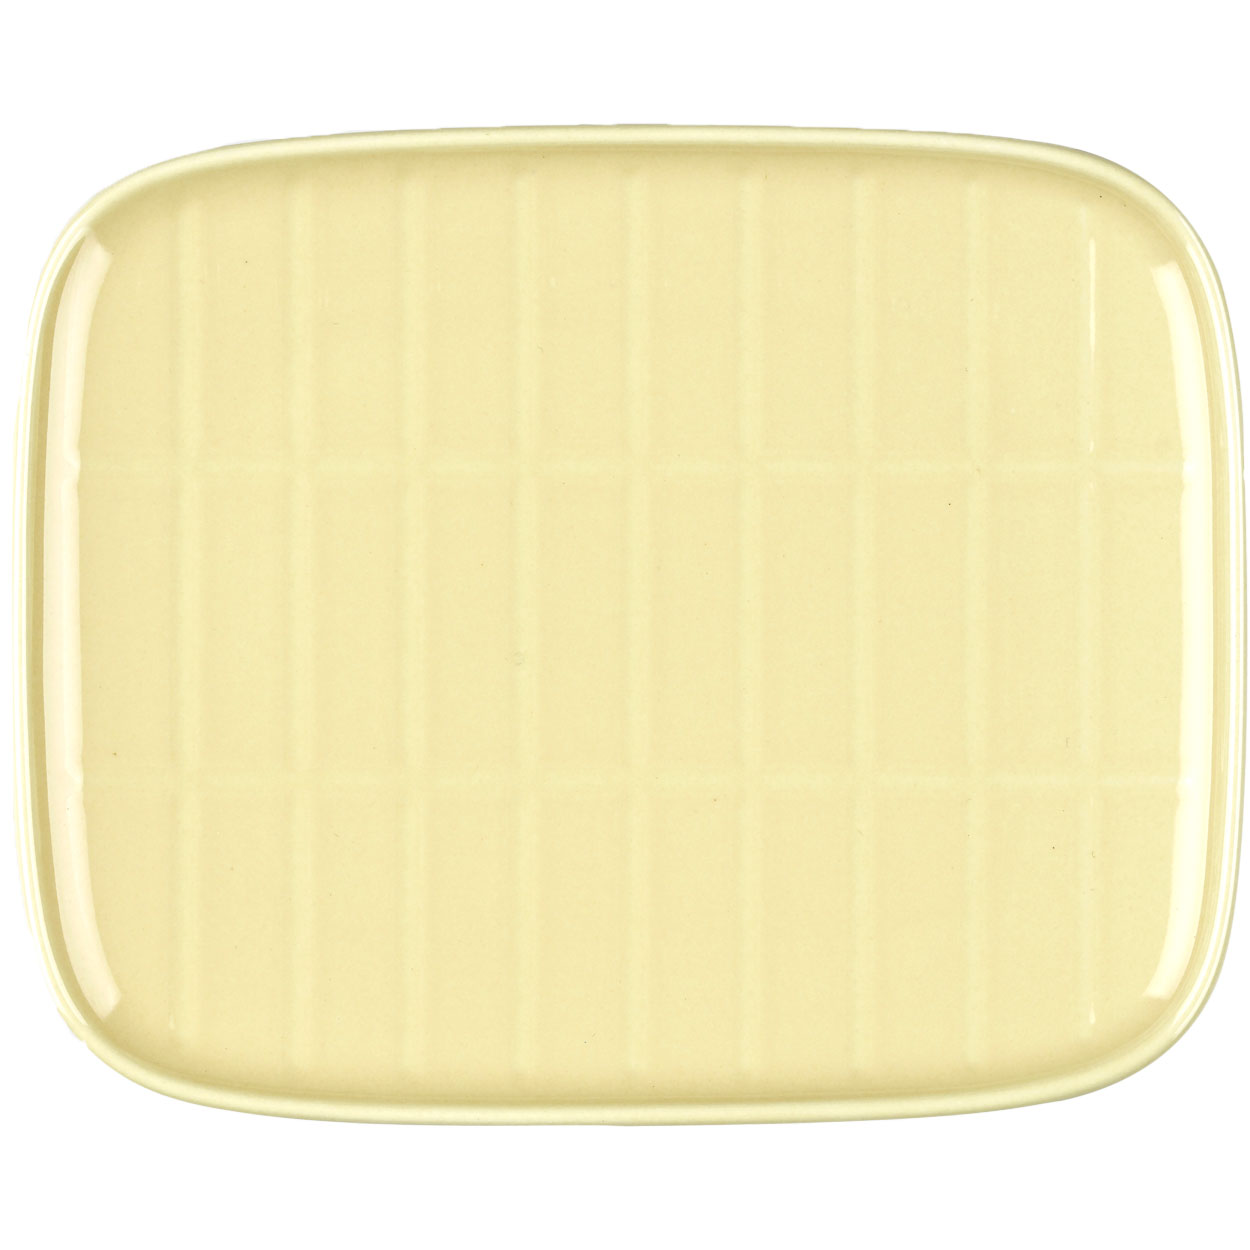 Oiva/Tiiliskivi Plate 12x15 cm, Butter Yellow